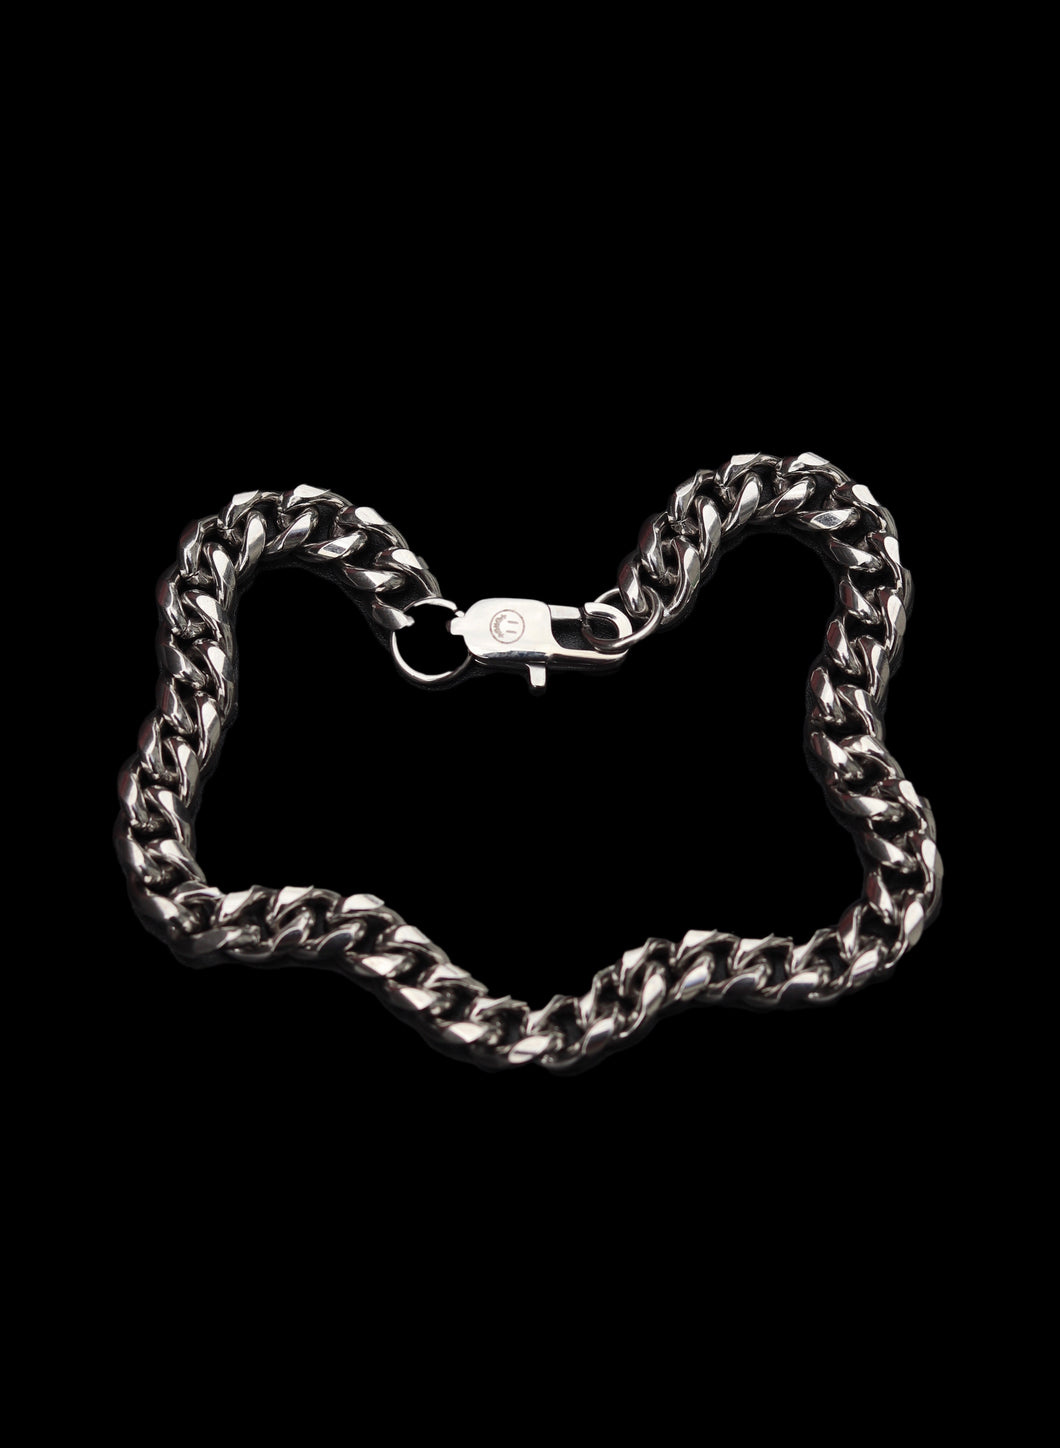 Silver Curb Bracelet 6mm - Fashion Jewelry by Yordy.